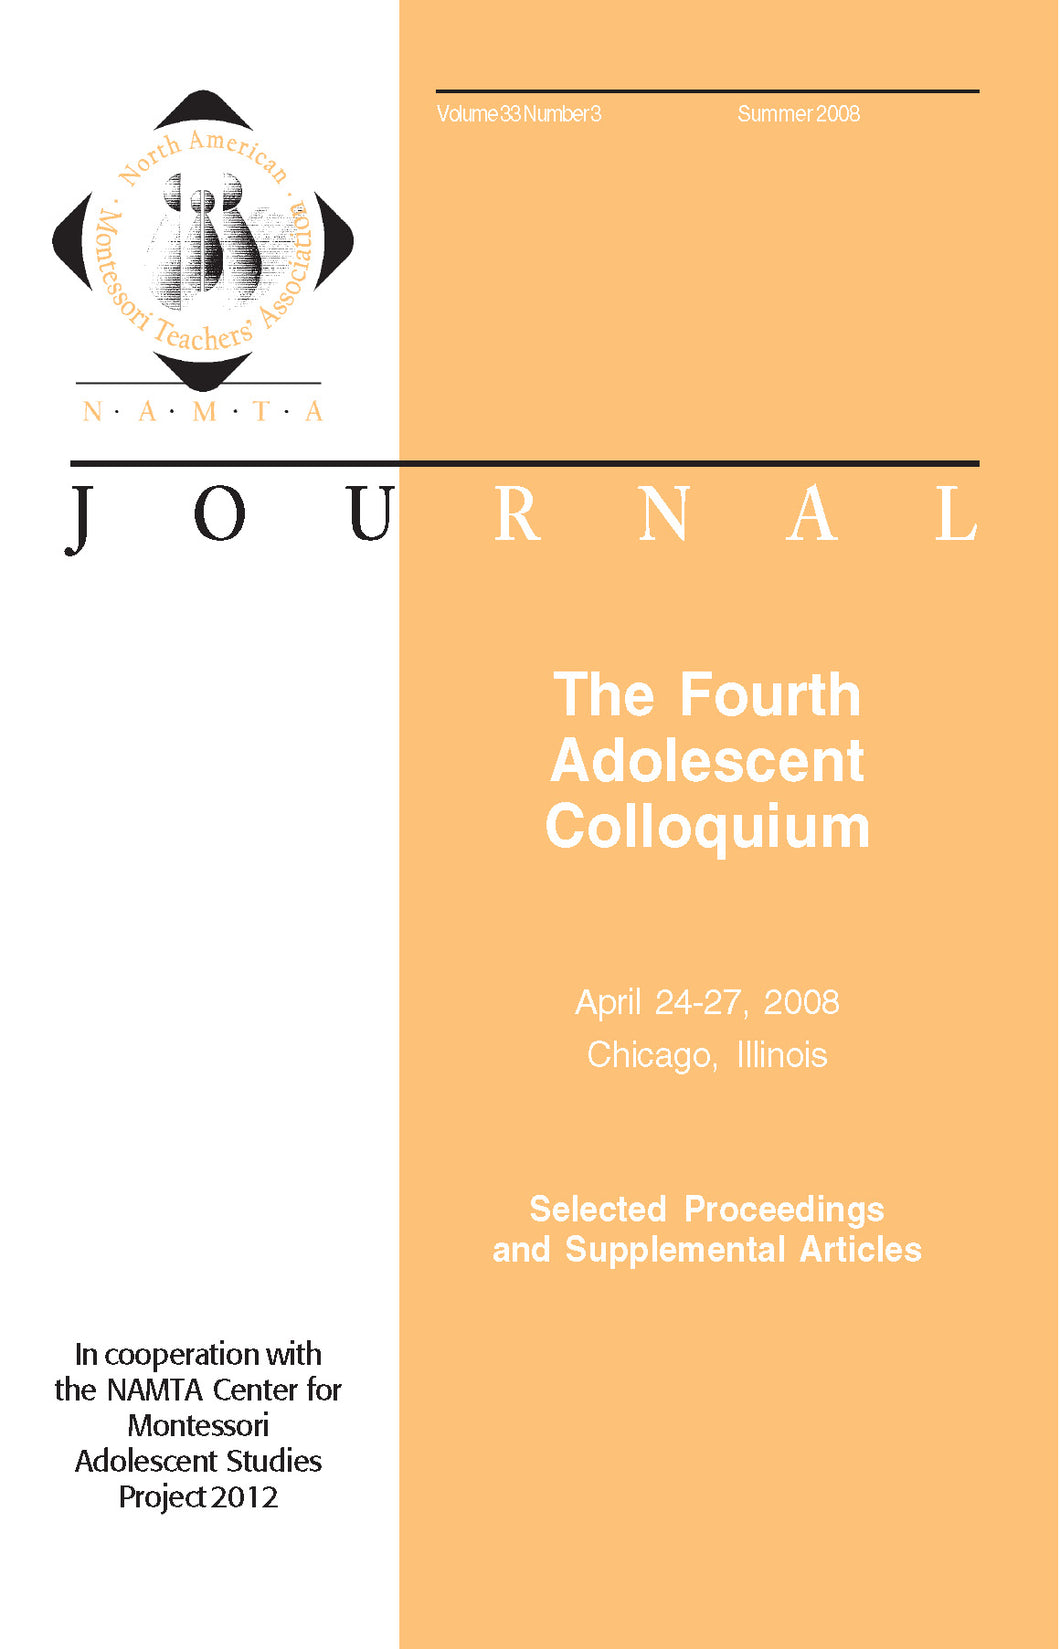 Vol 33, No 3: The Fourth Adolescent Colloquium